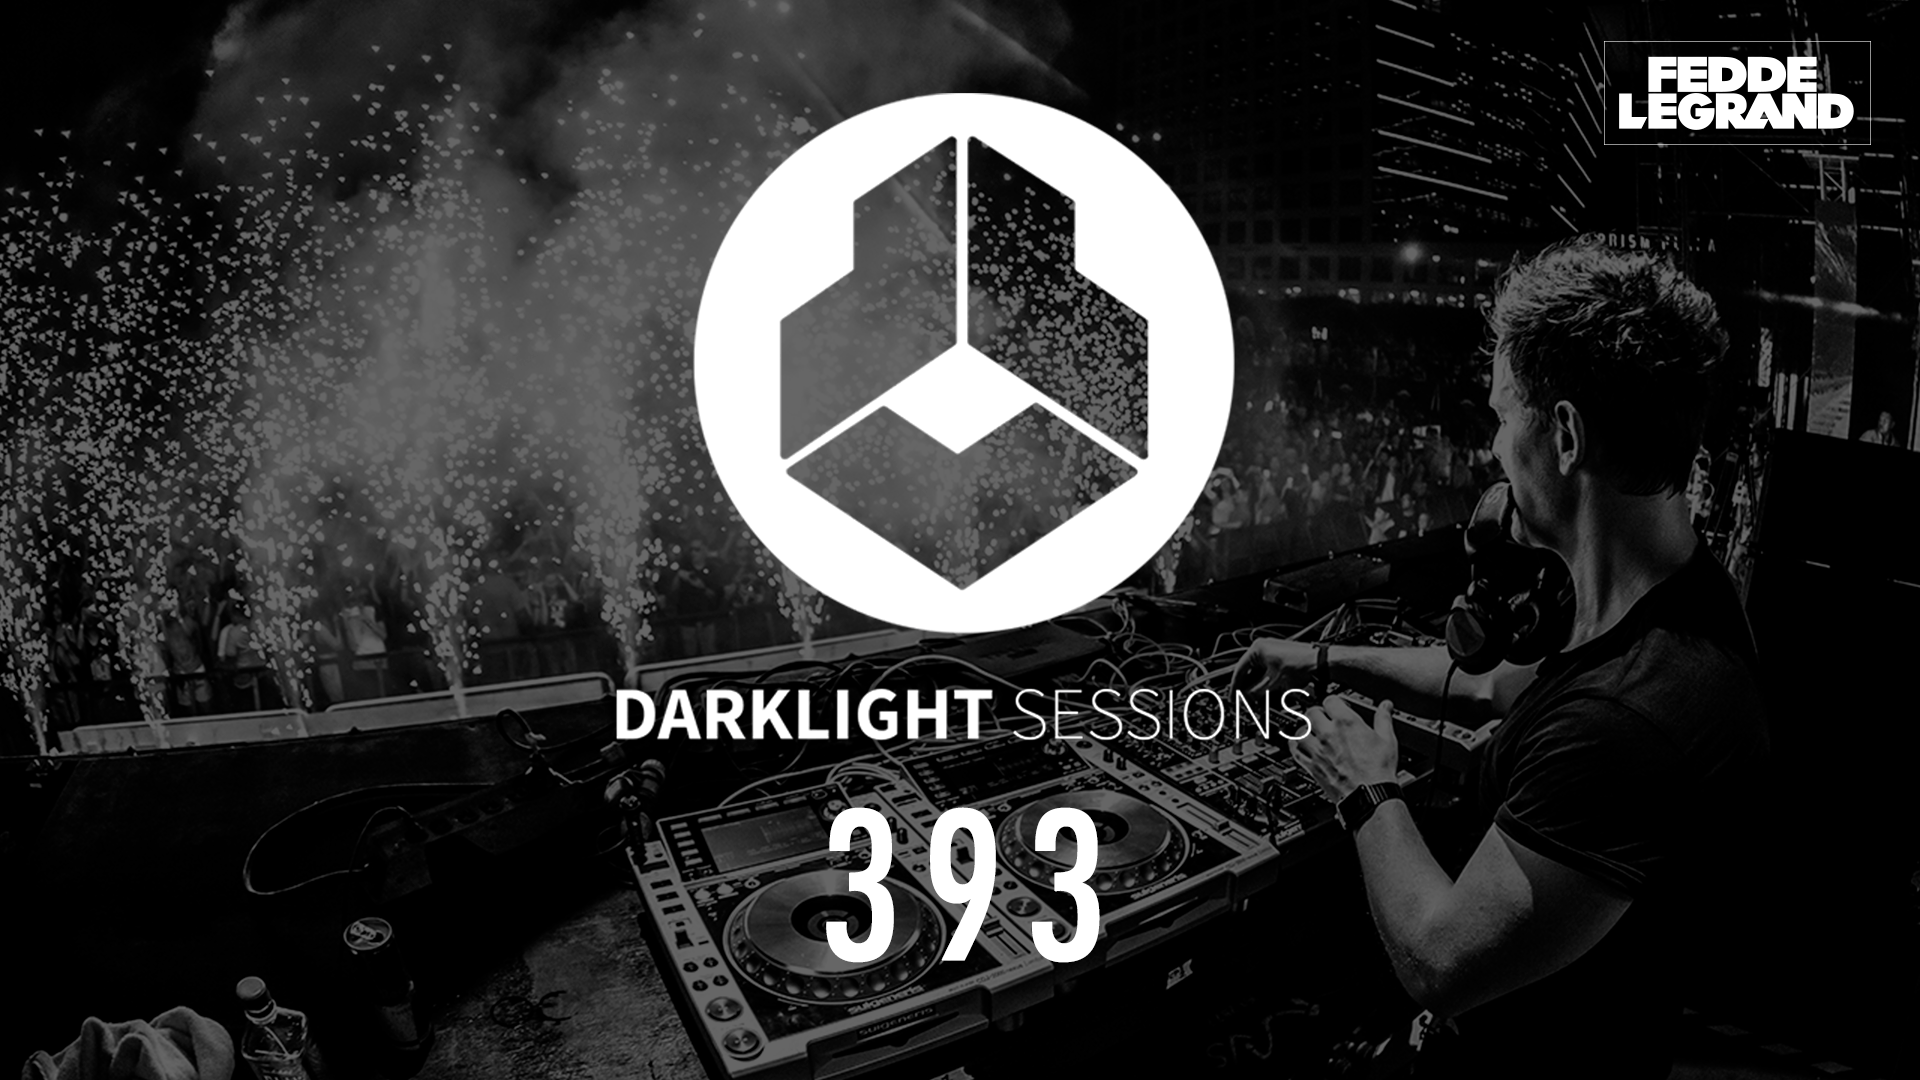 Darklight Sessions 393